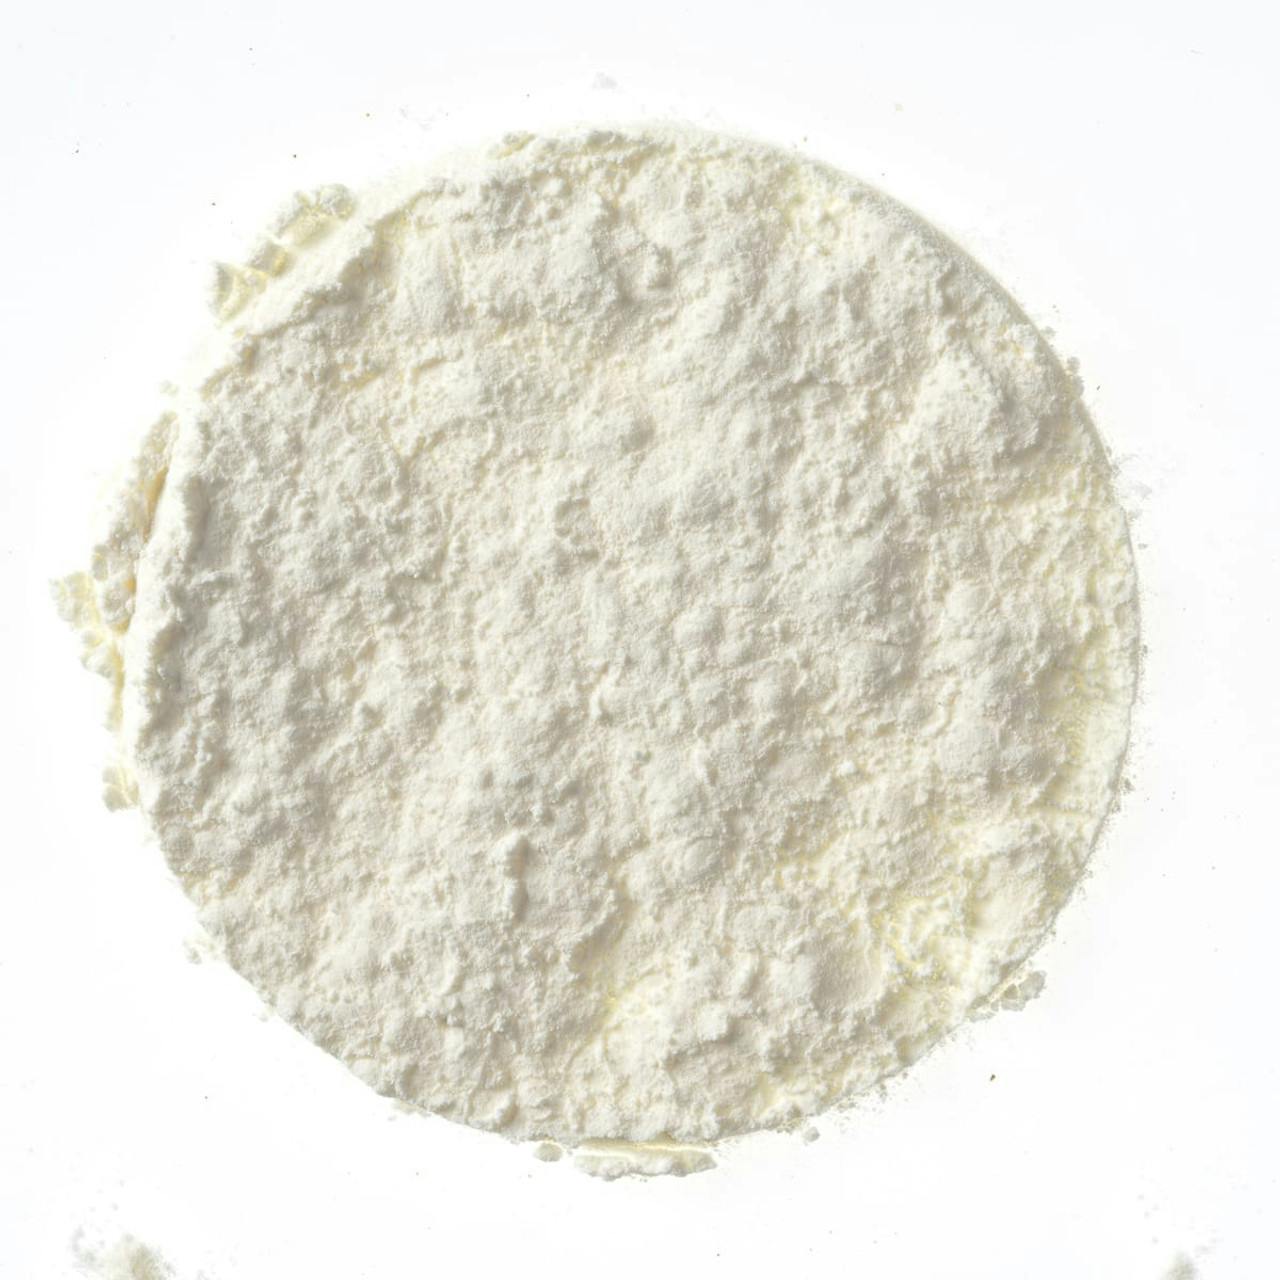 dry pectin powder